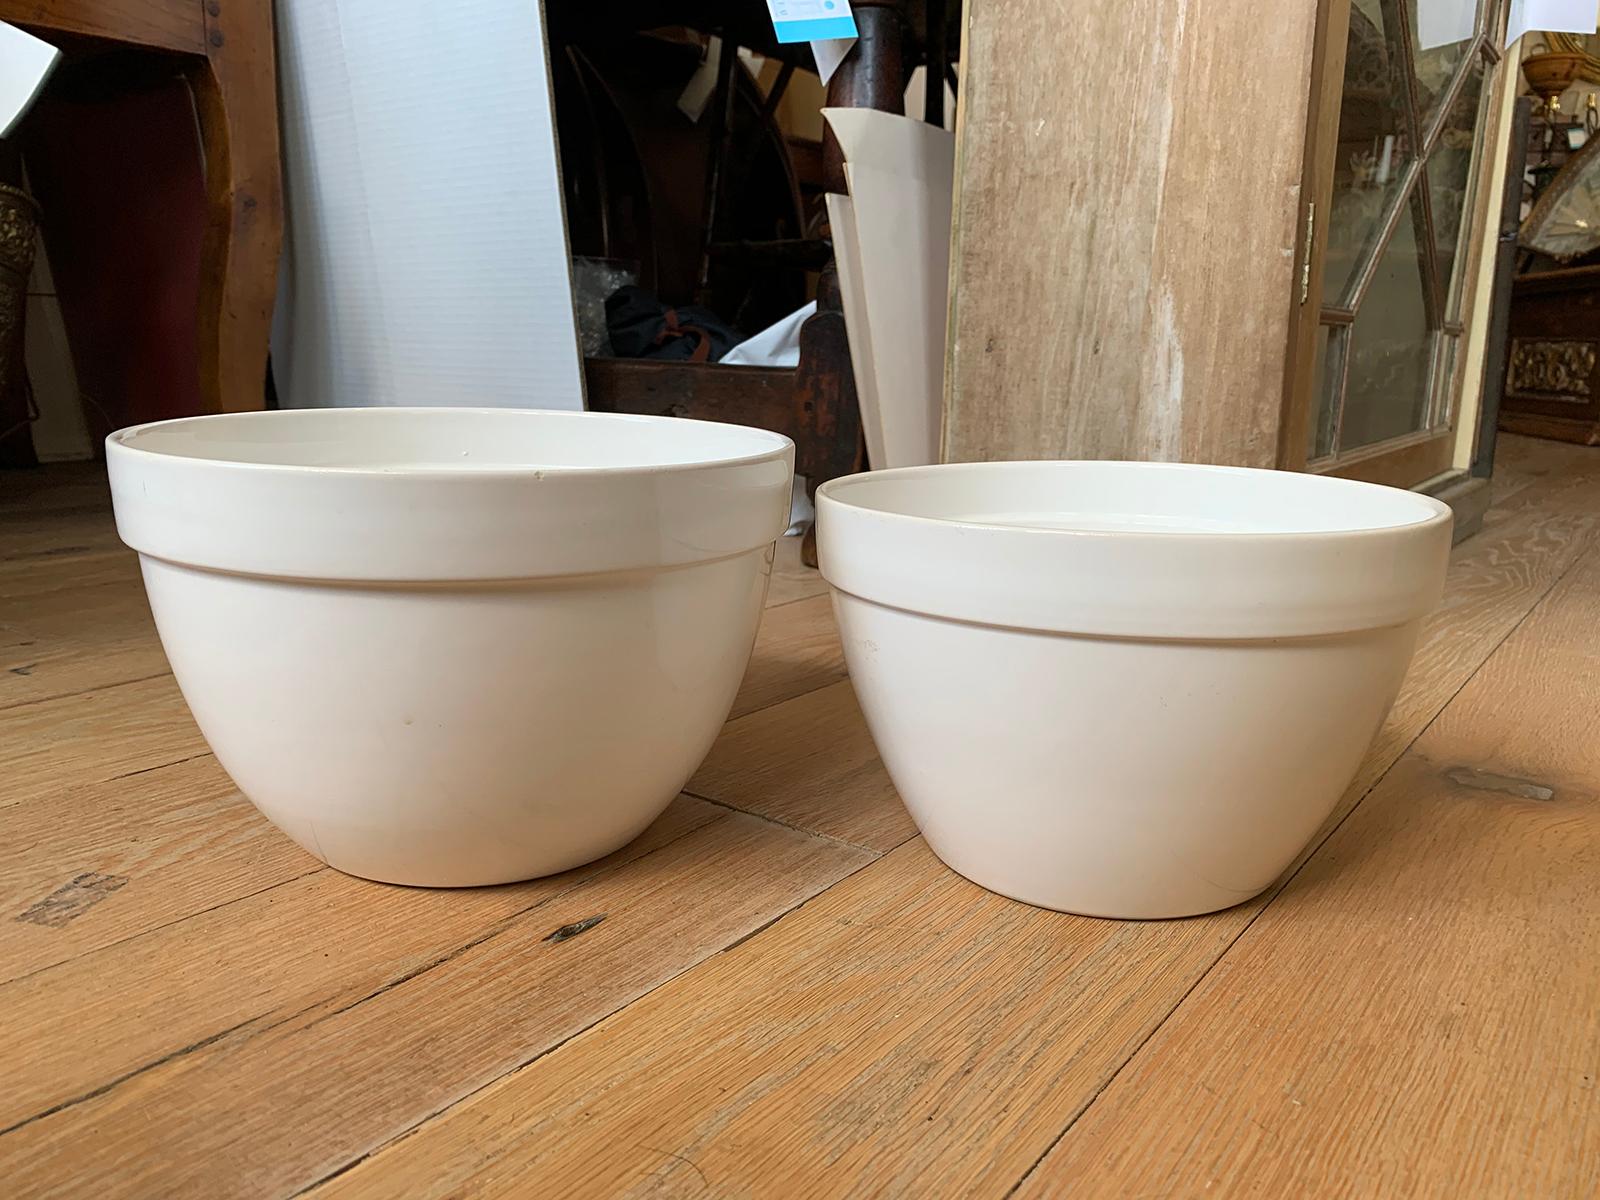 Pair of 20th century ceramic white bowls
Measures: Larger 10